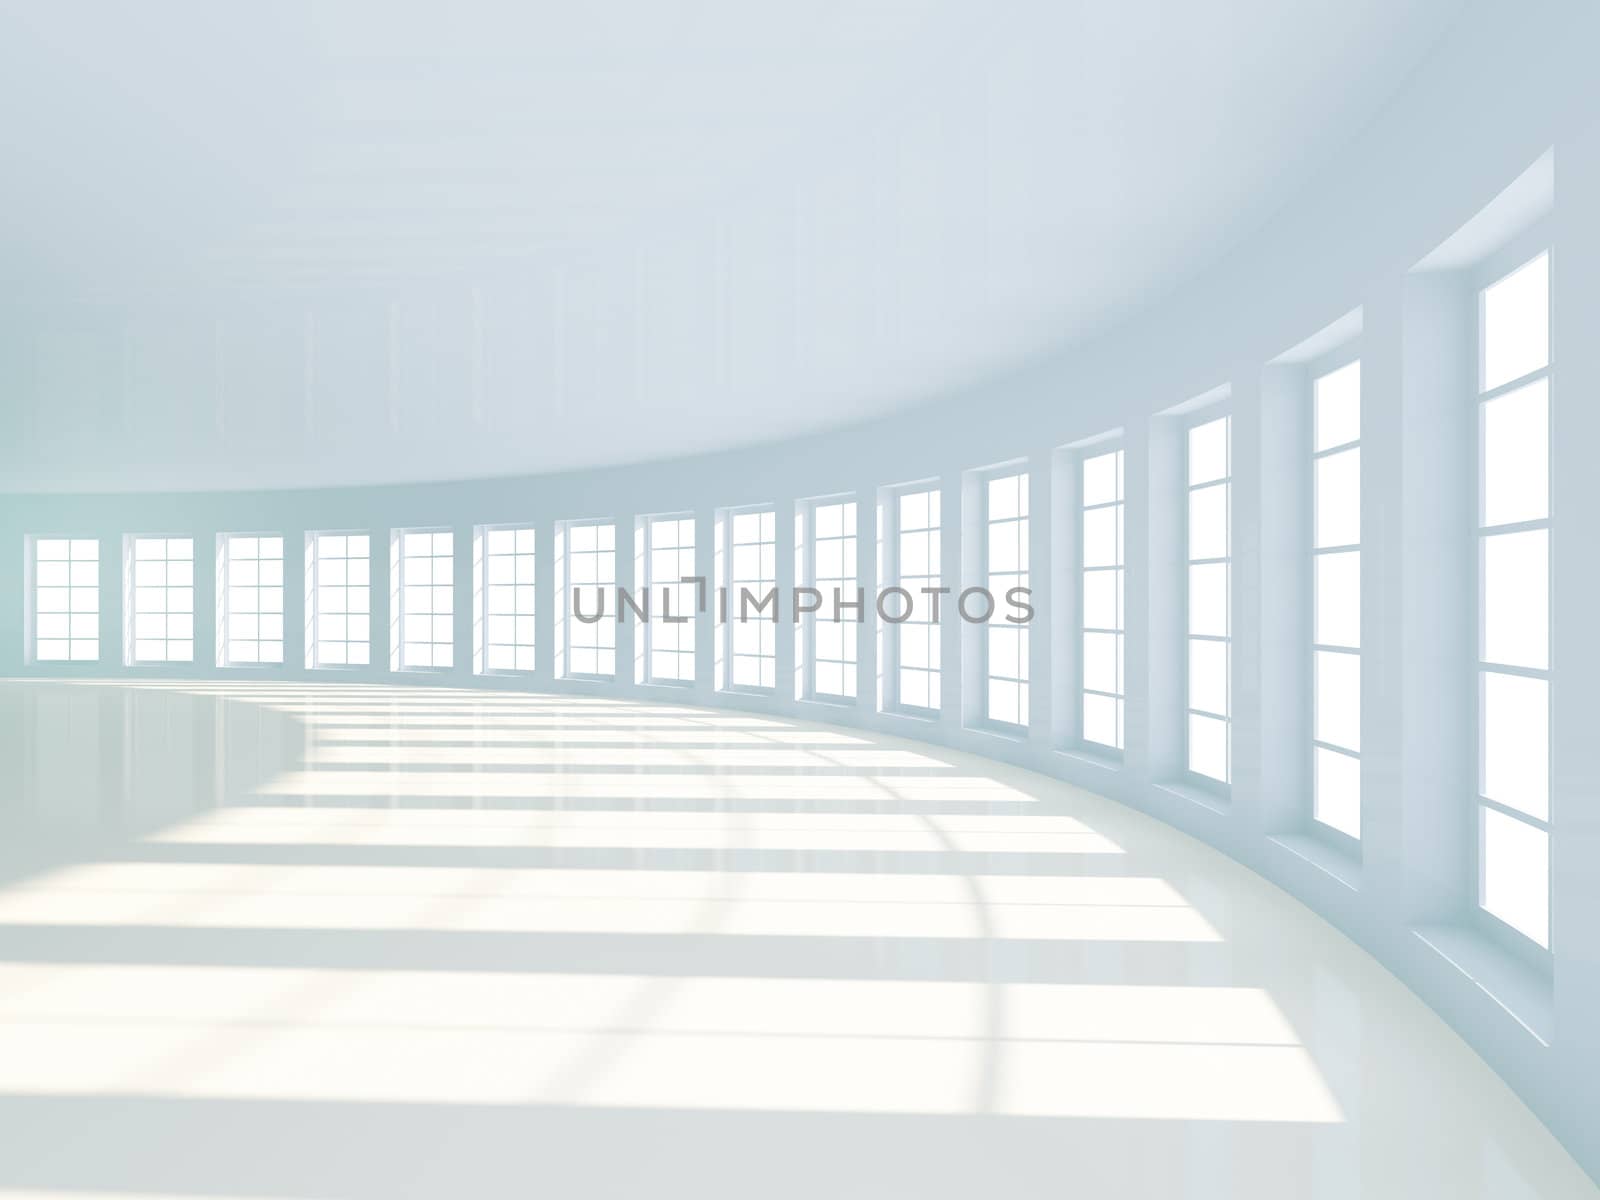 3d illustration of long empty hallway